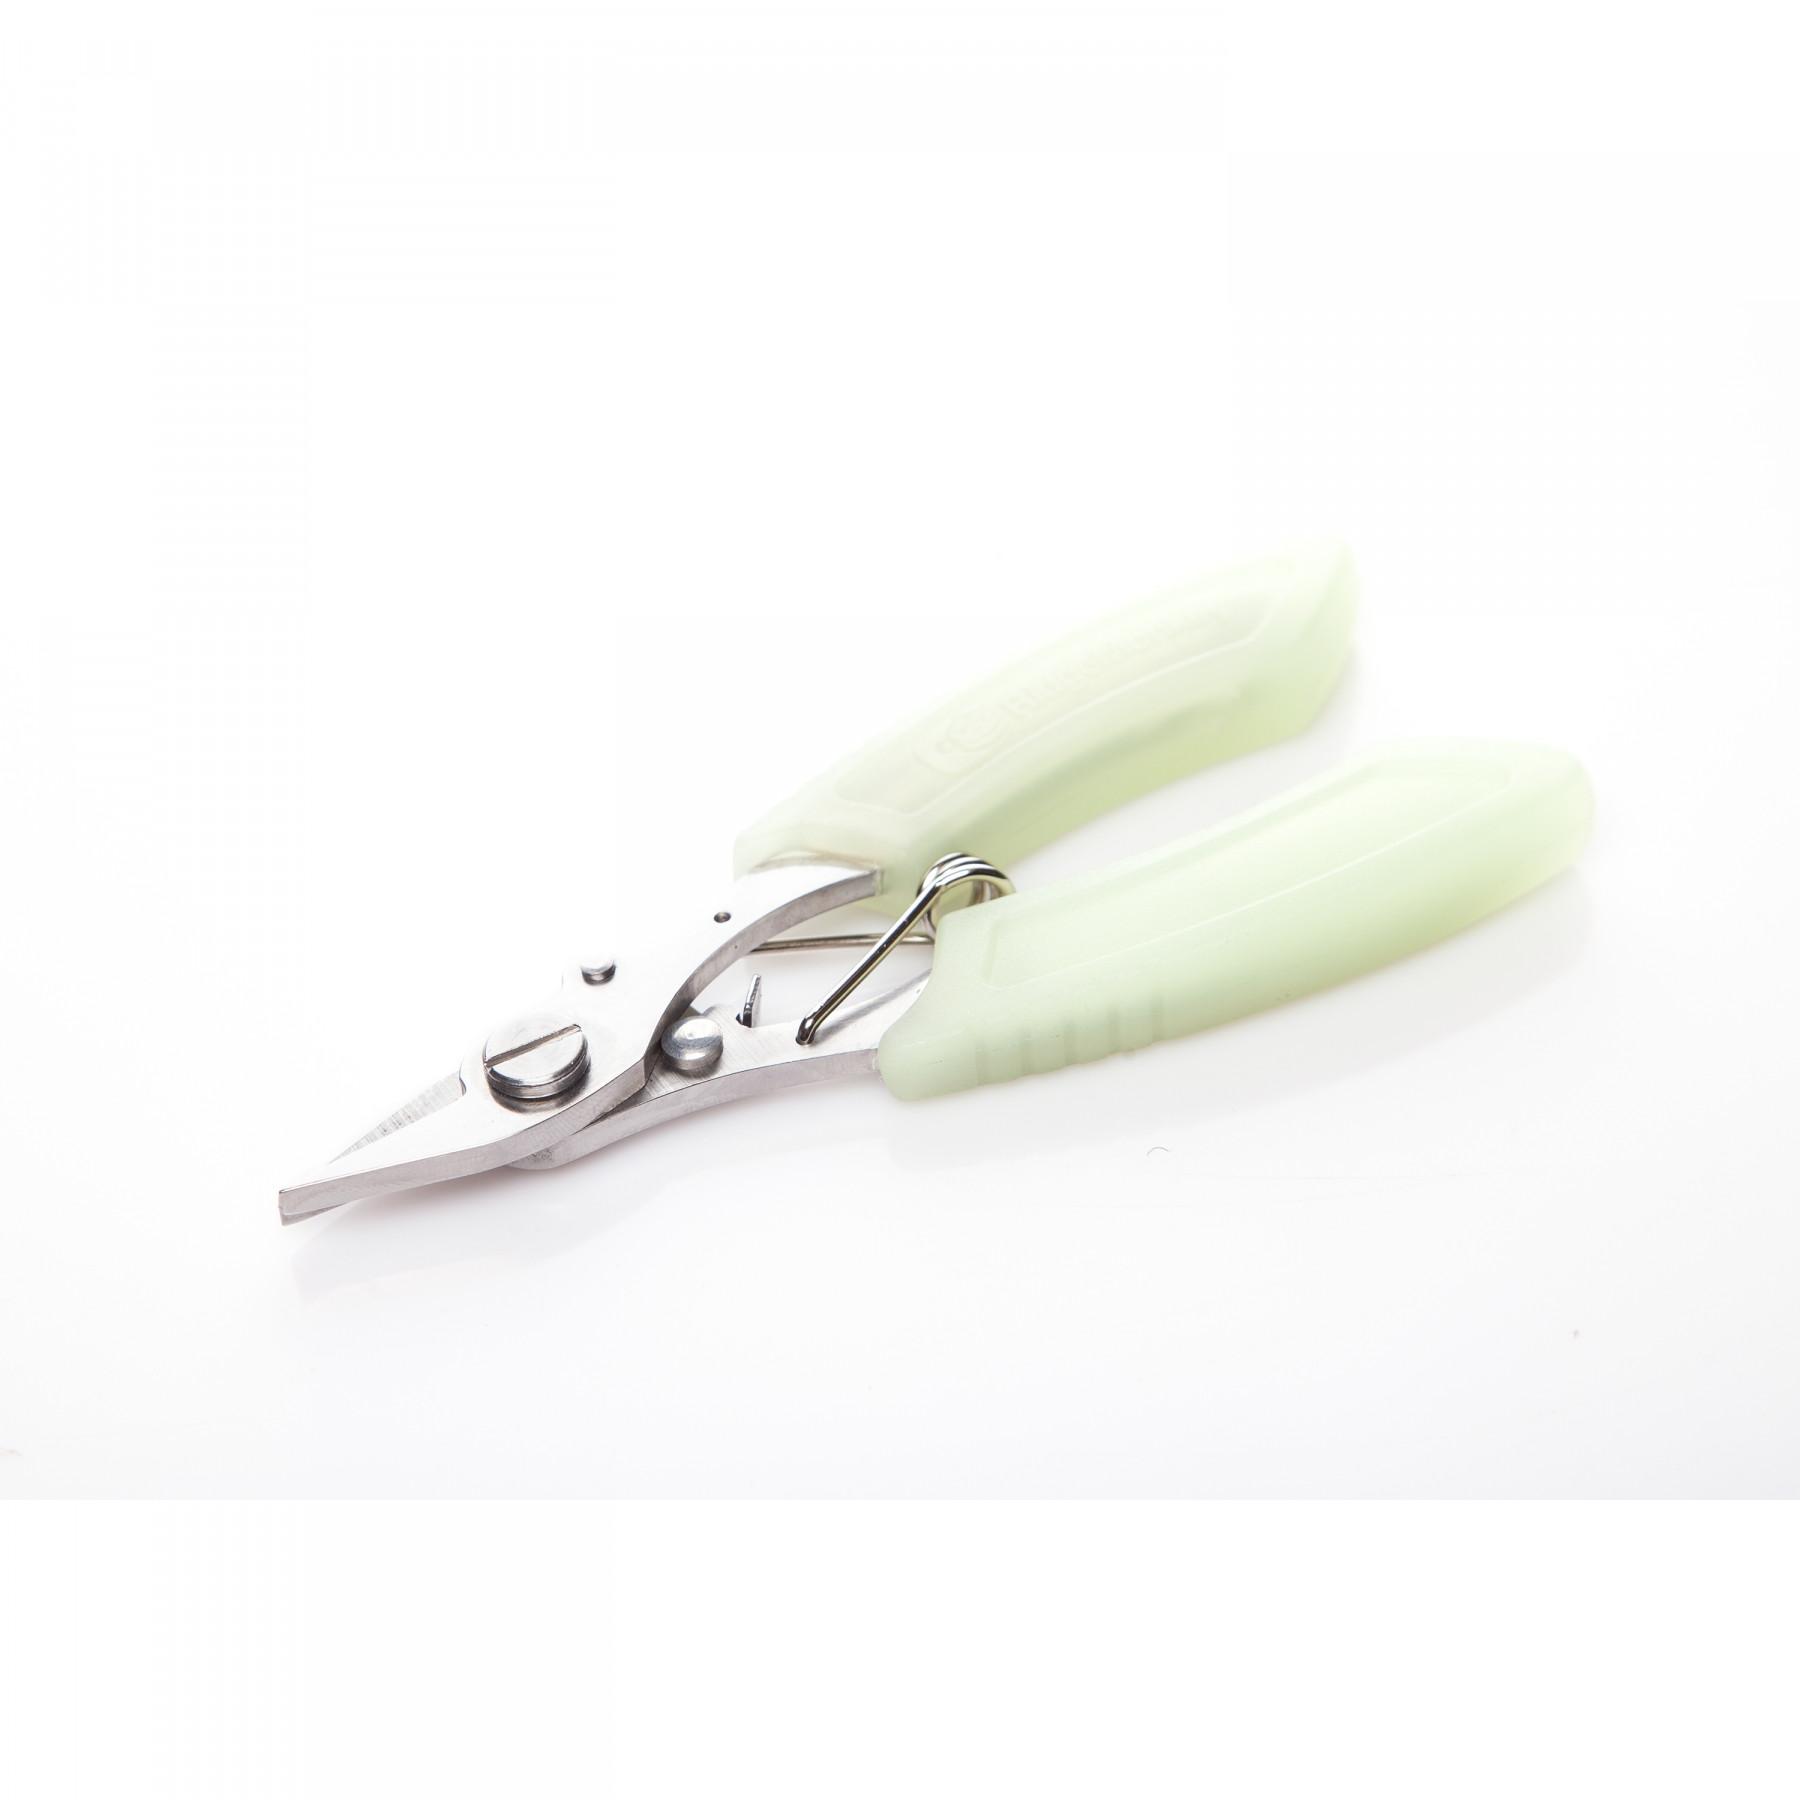 Nite-Glo Braid RidgeMonkey Scissors